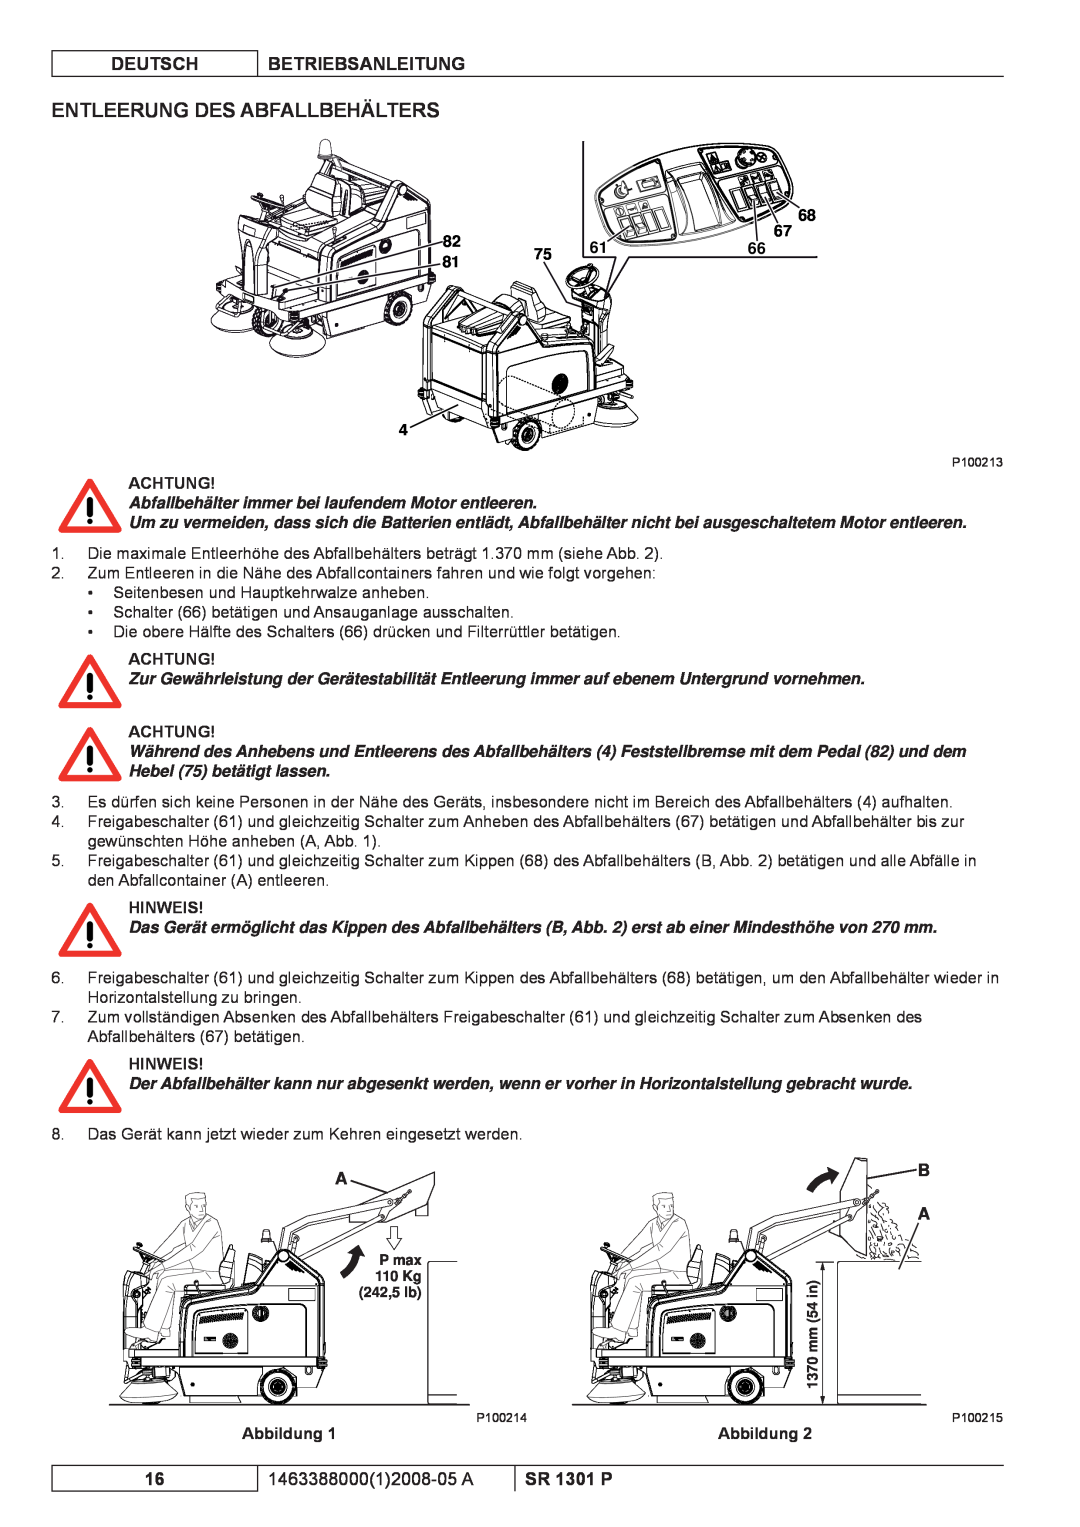 Nilfisk-ALTO SR 1301 P Entleerung Des Abfallbehälters, Abbildung, Deutsch, Betriebsanleitung, 146338800012008-05 A 